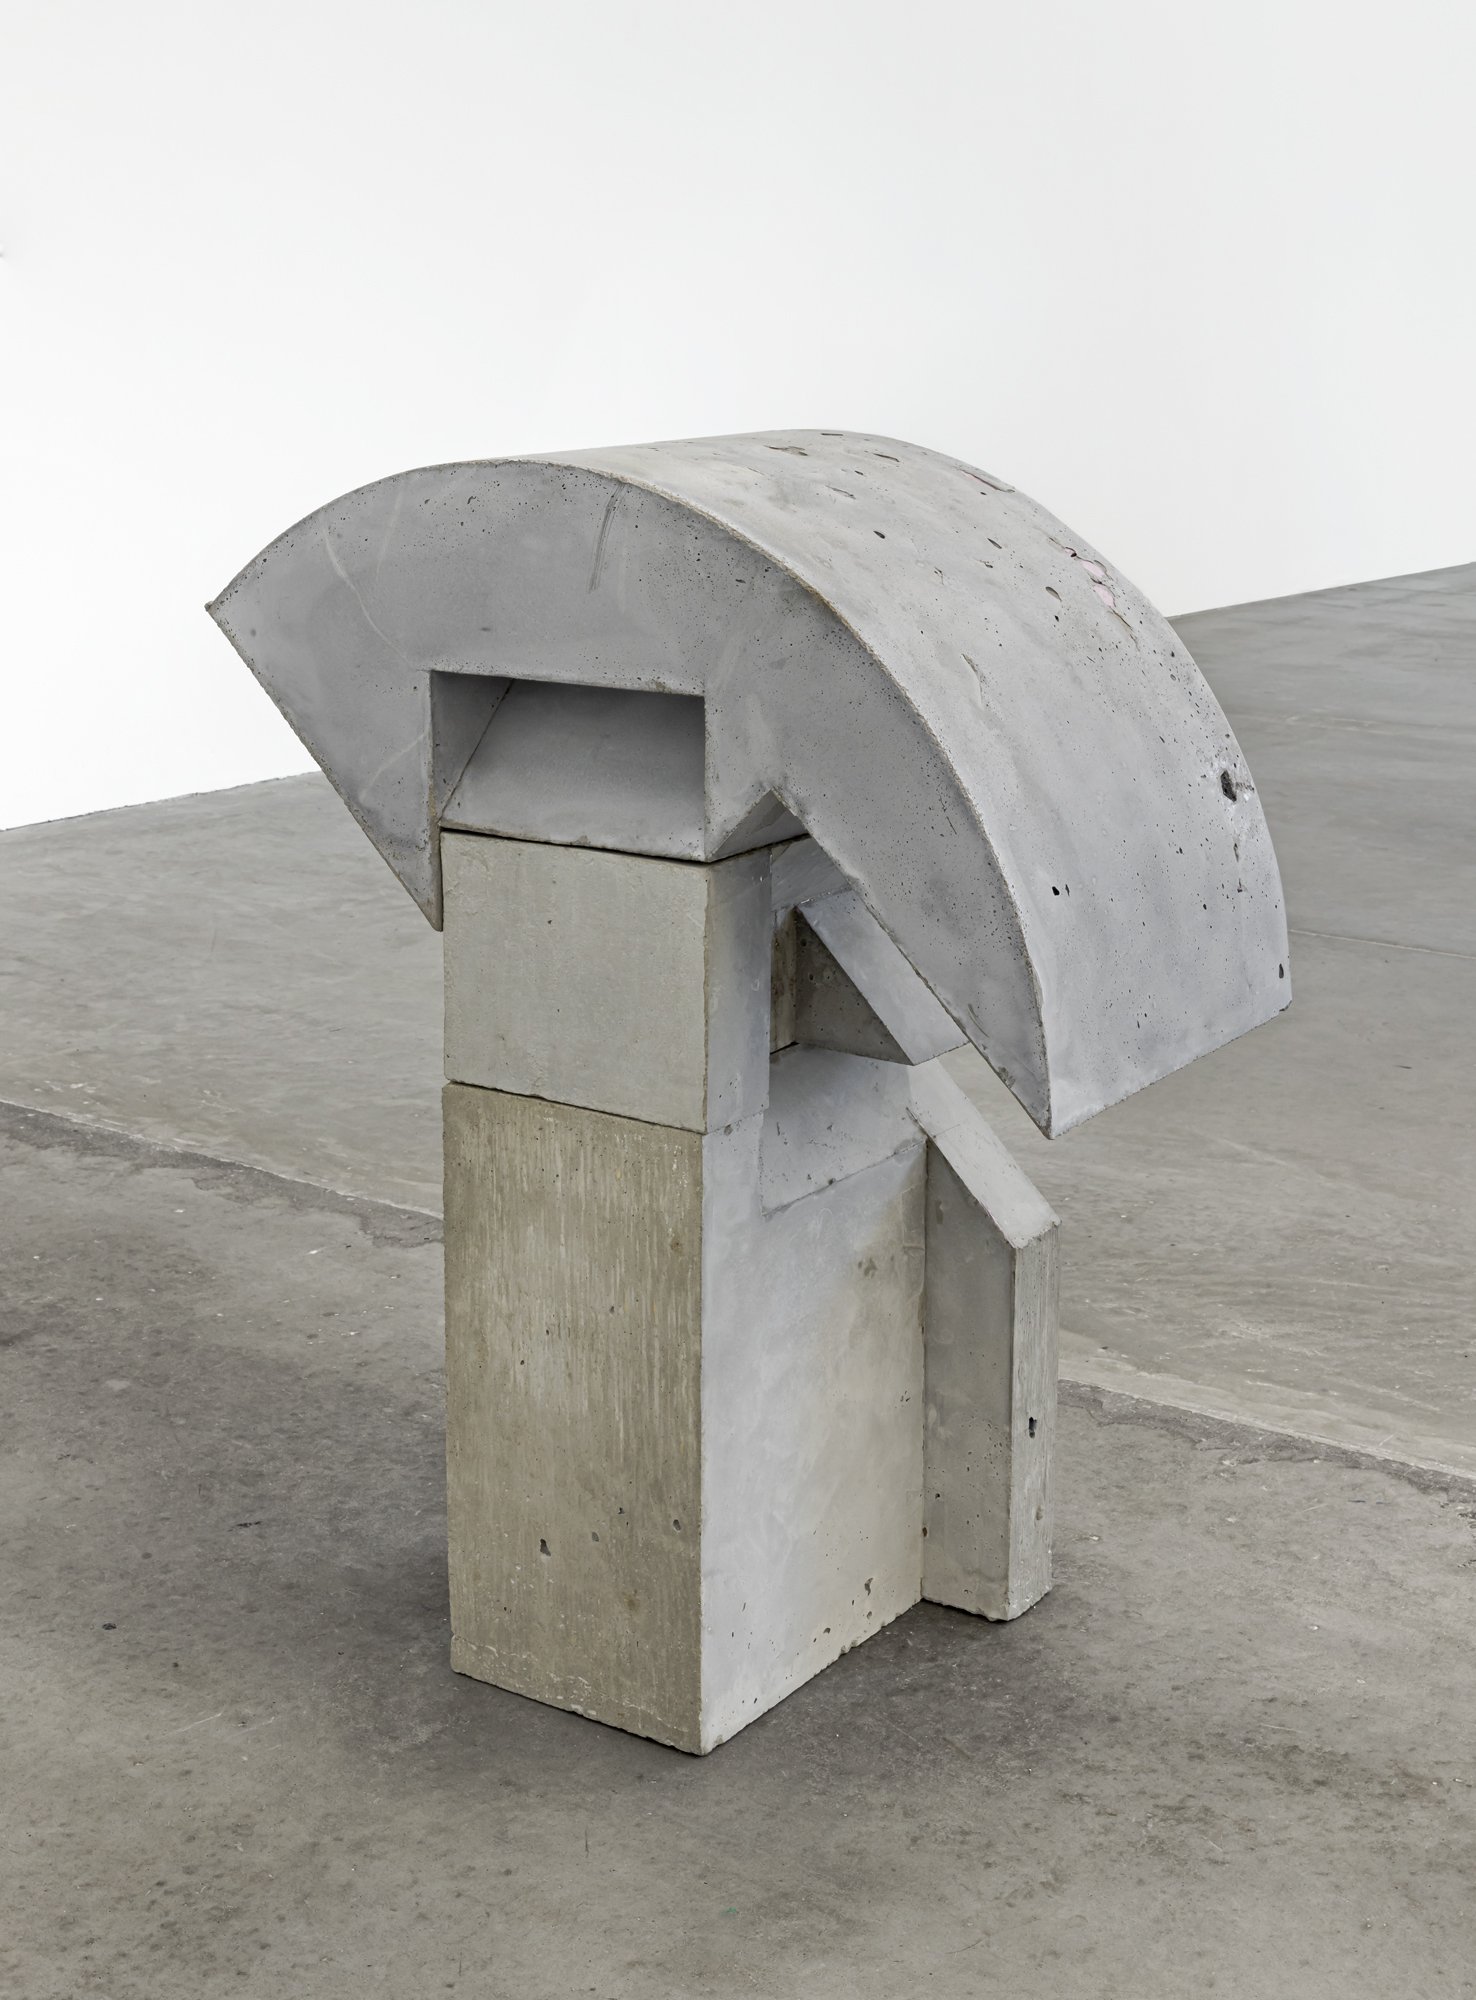   Balopine , 2015, concrete and foam, 36 x 15 x 28 in 